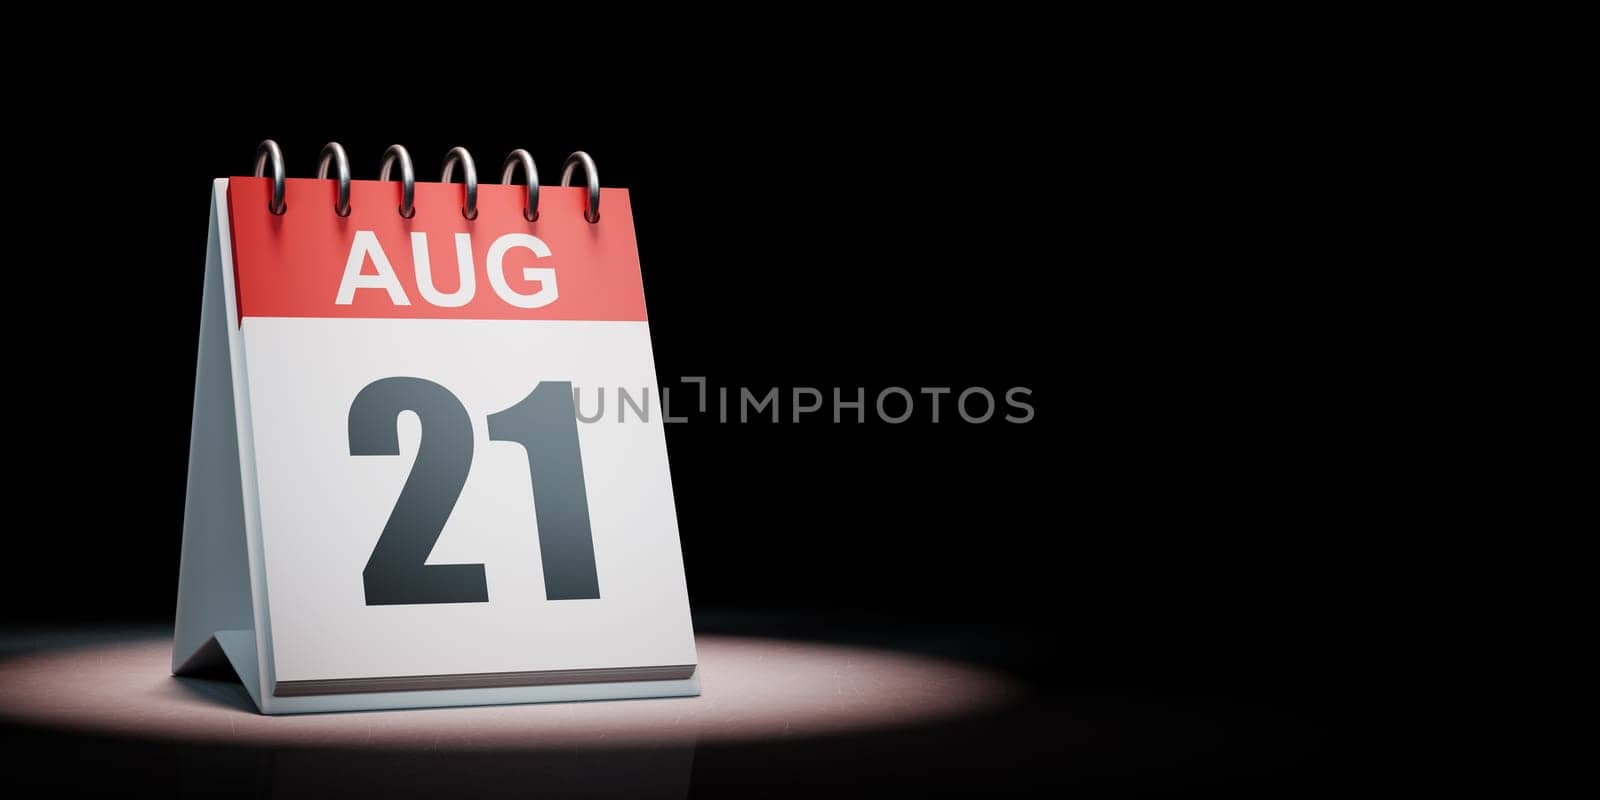 August 21 Calendar Spotlighted on Black Background by make